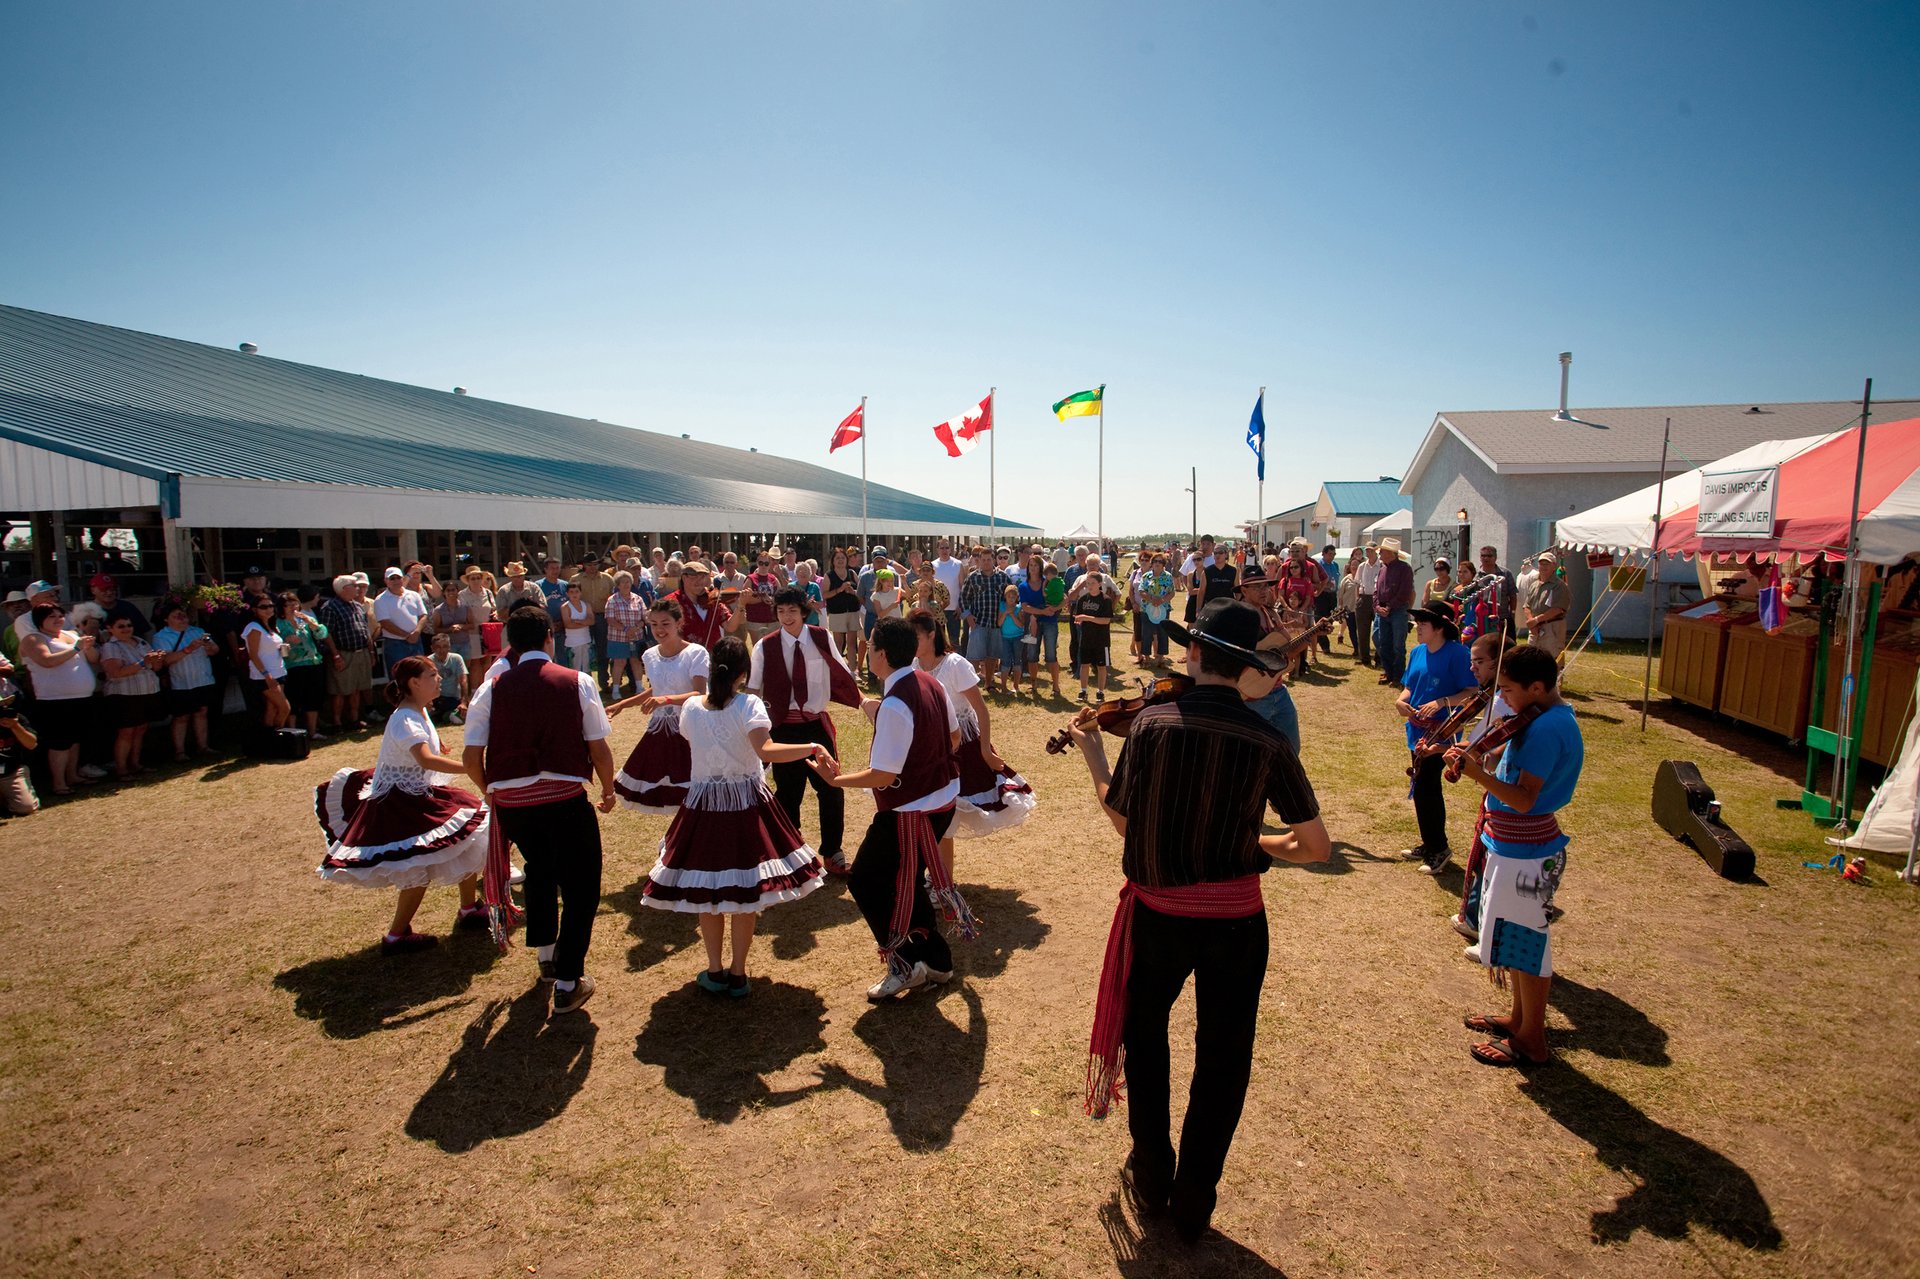 Saskatchewan Events and Festivals – August 2022